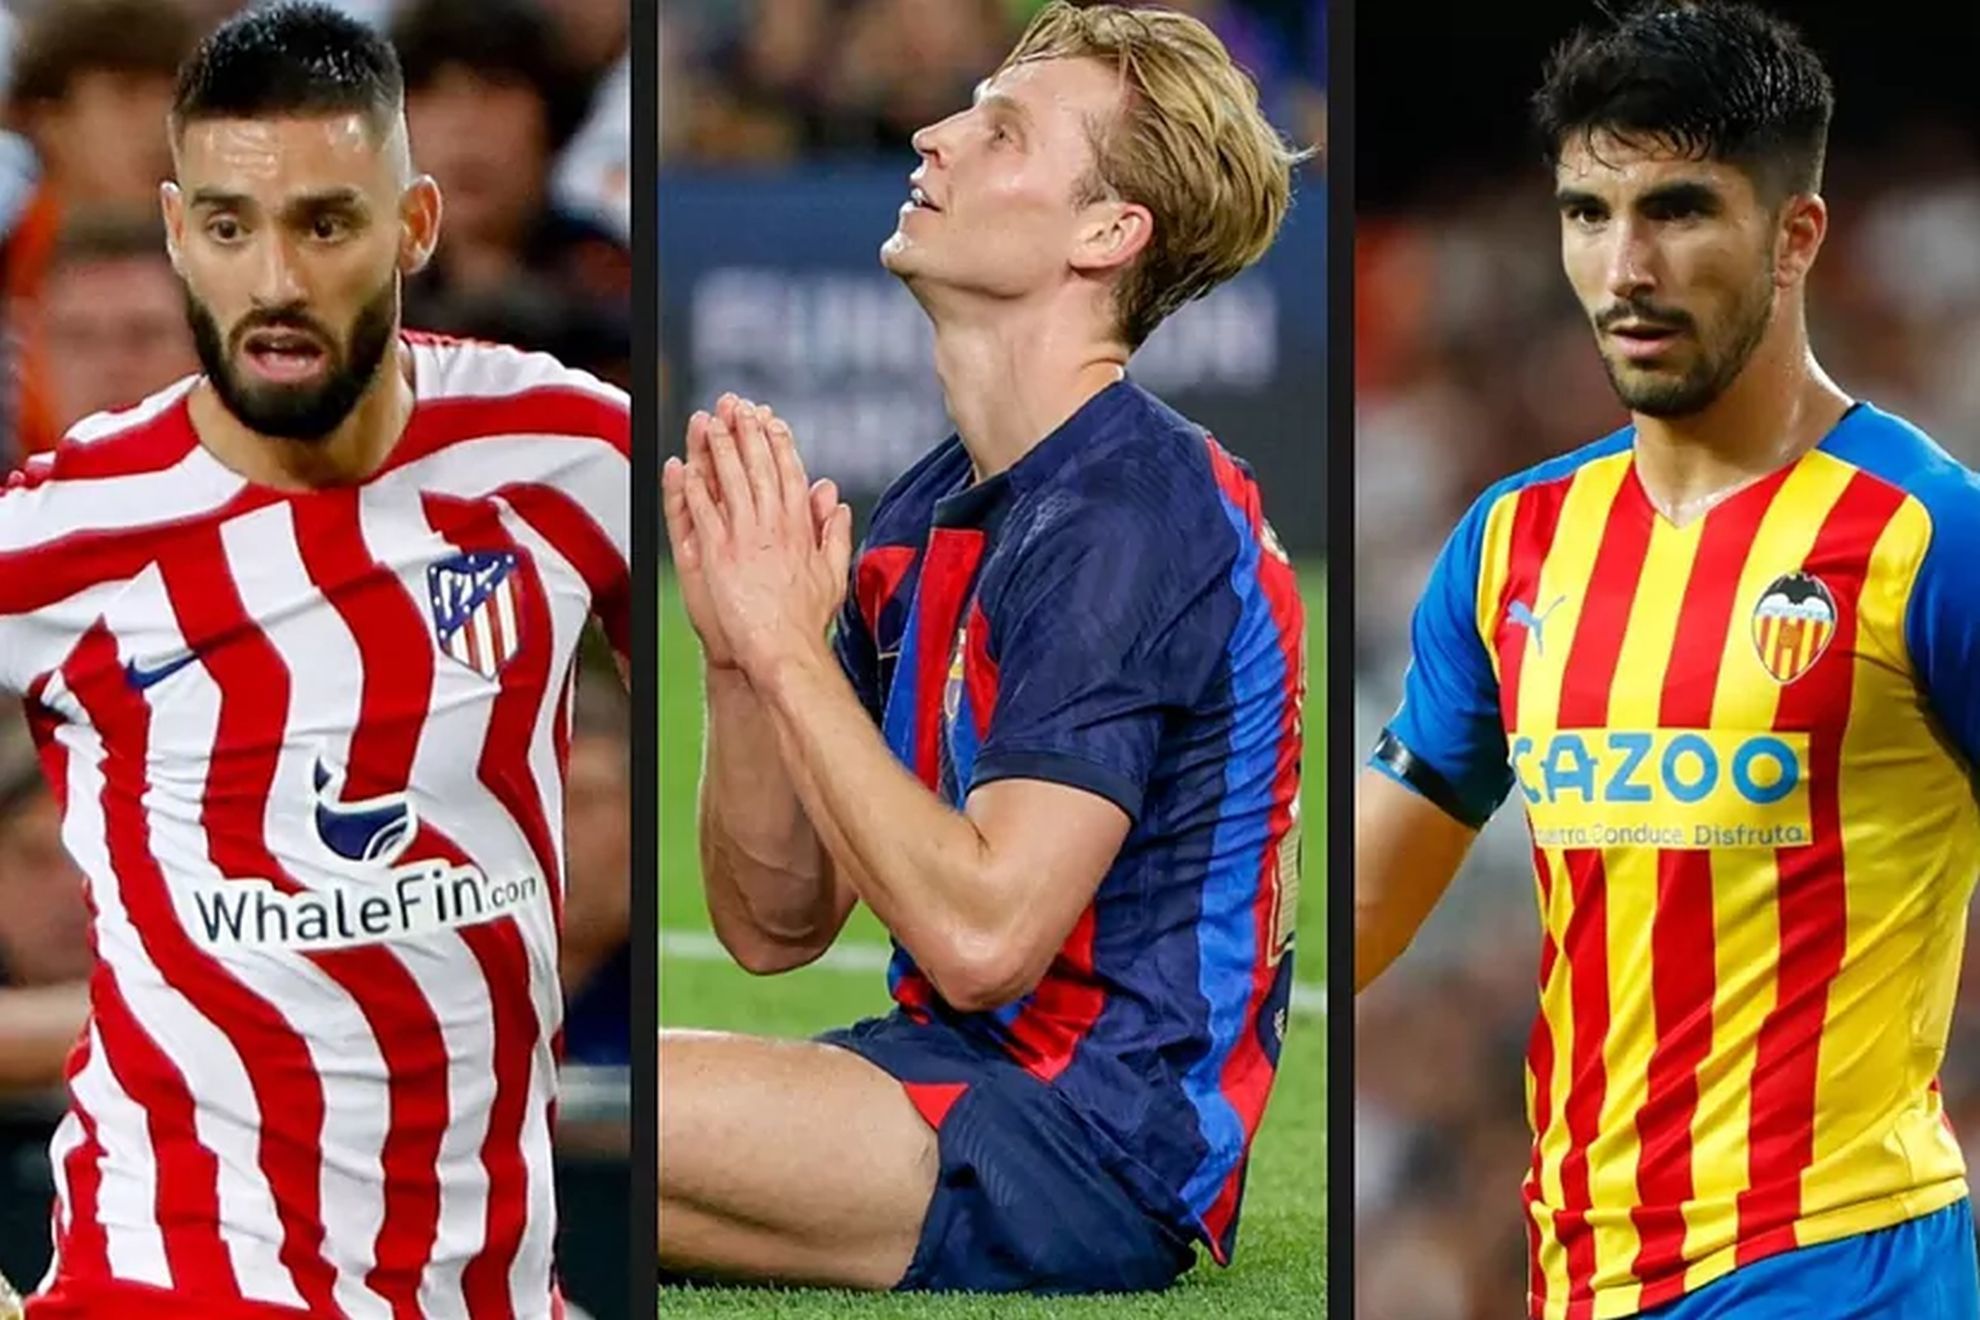 Transfer News LIVE, August 30: Latest on Carrasco, Sadiq, De Jong, Soler and Real Madrid's future No.9